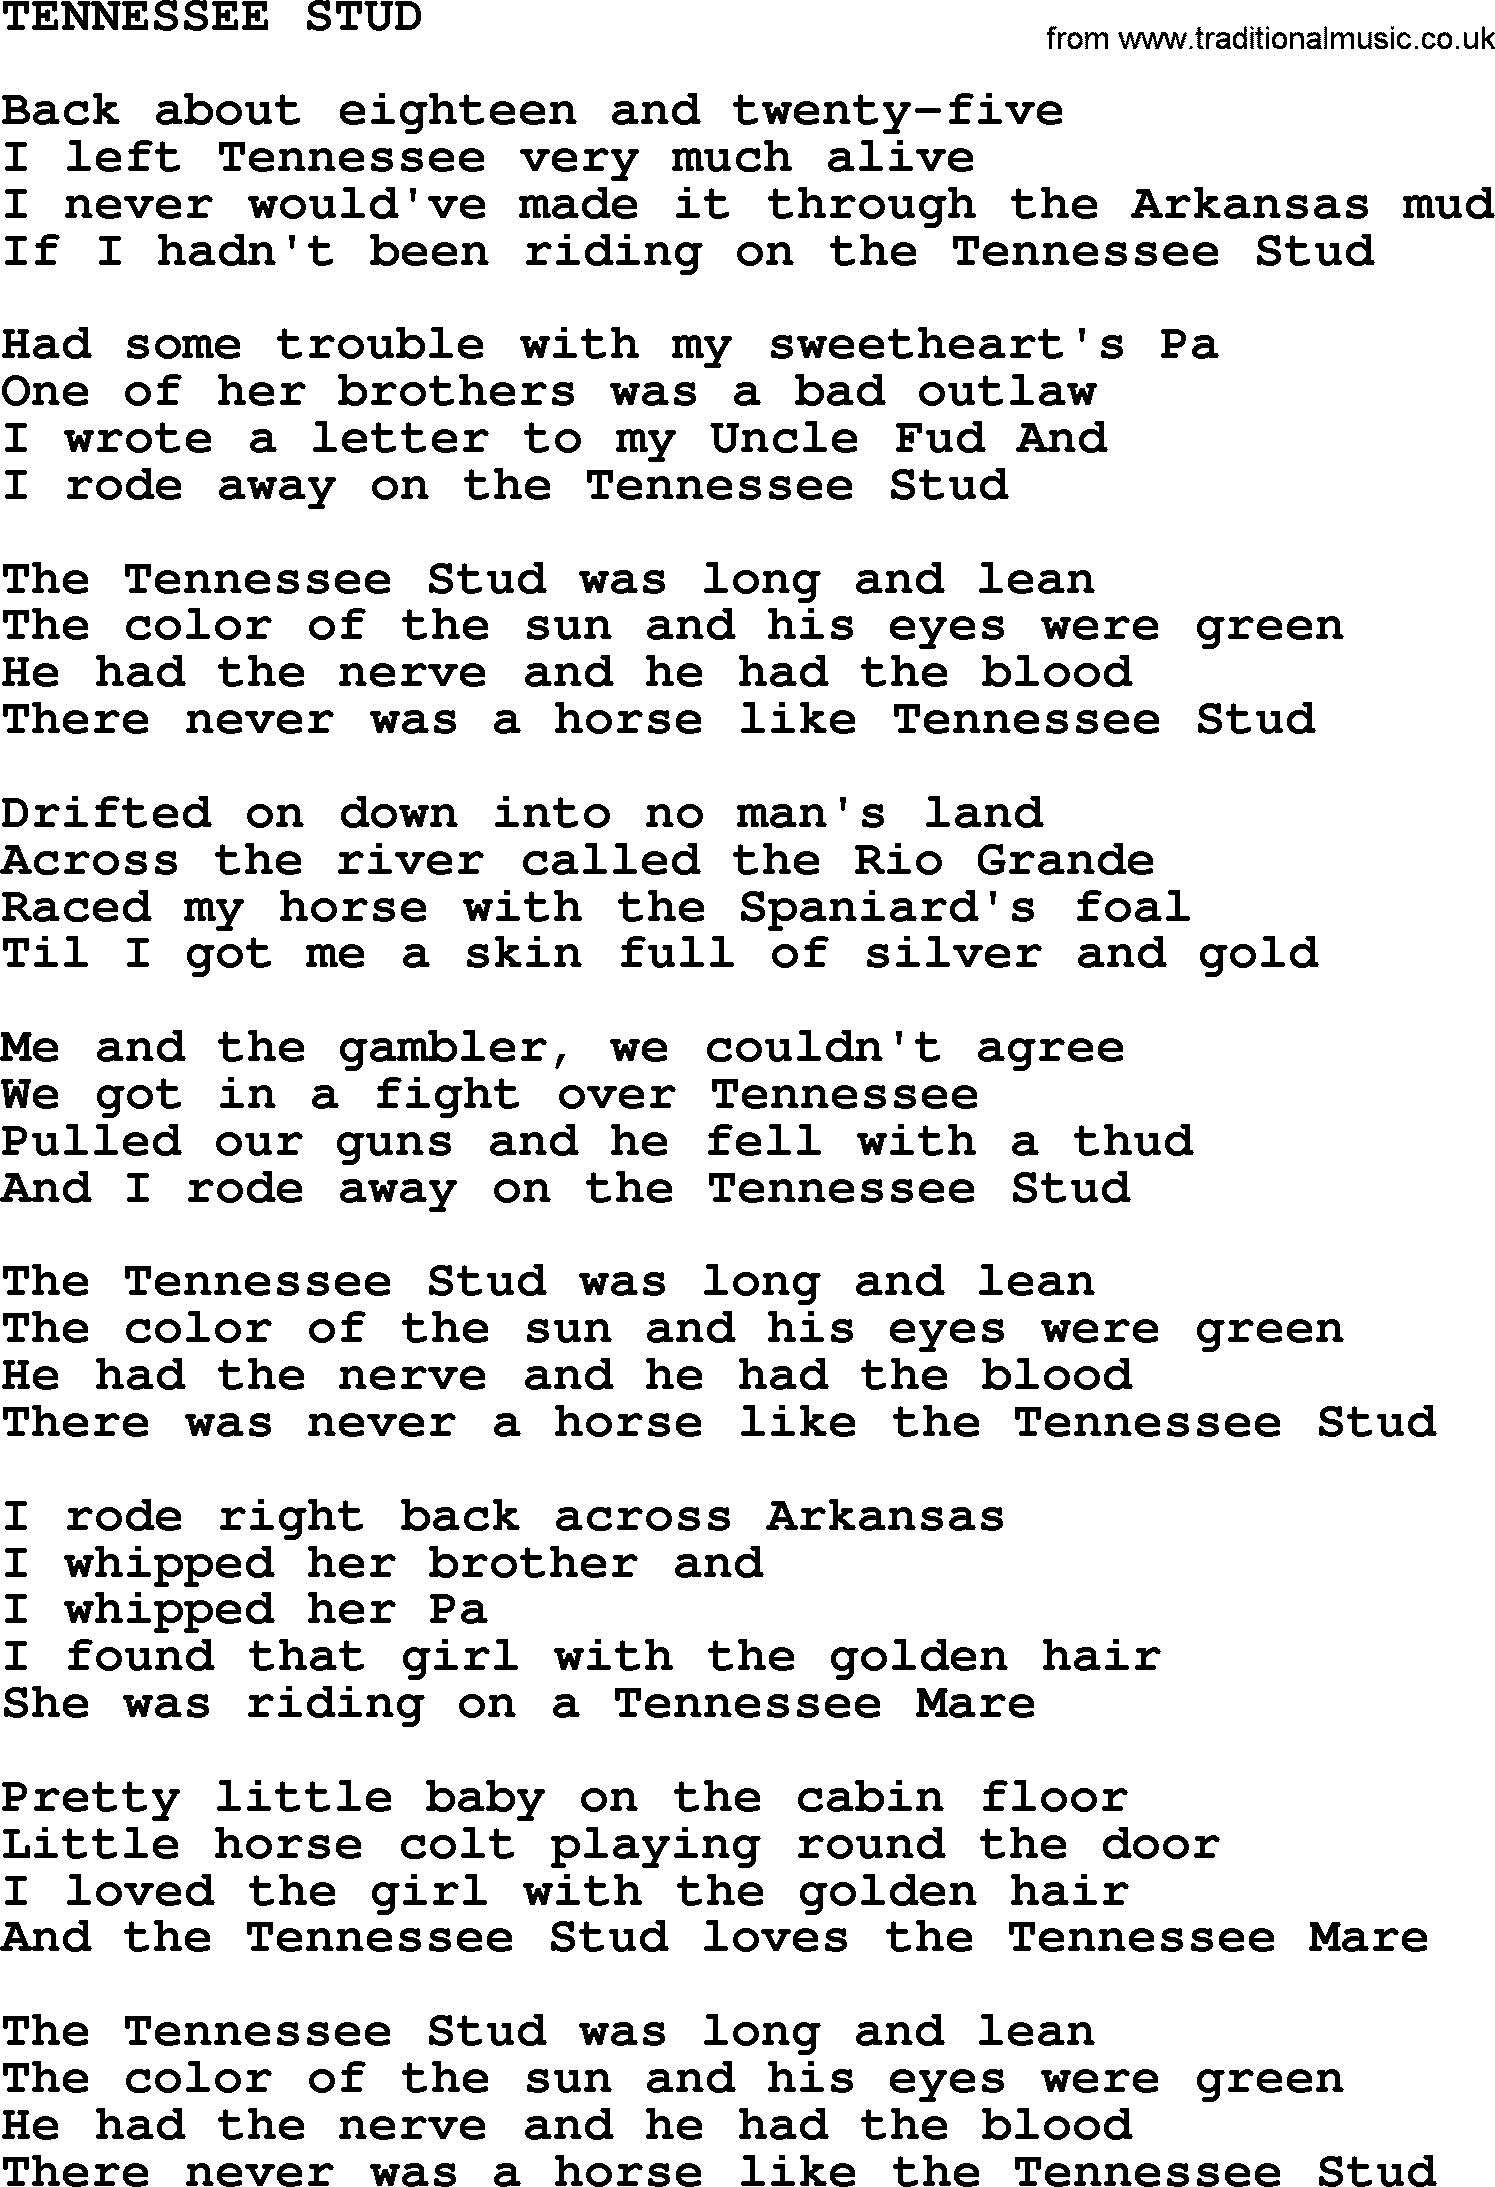 Johnny Cash song Tennessee Stud.txt lyrics